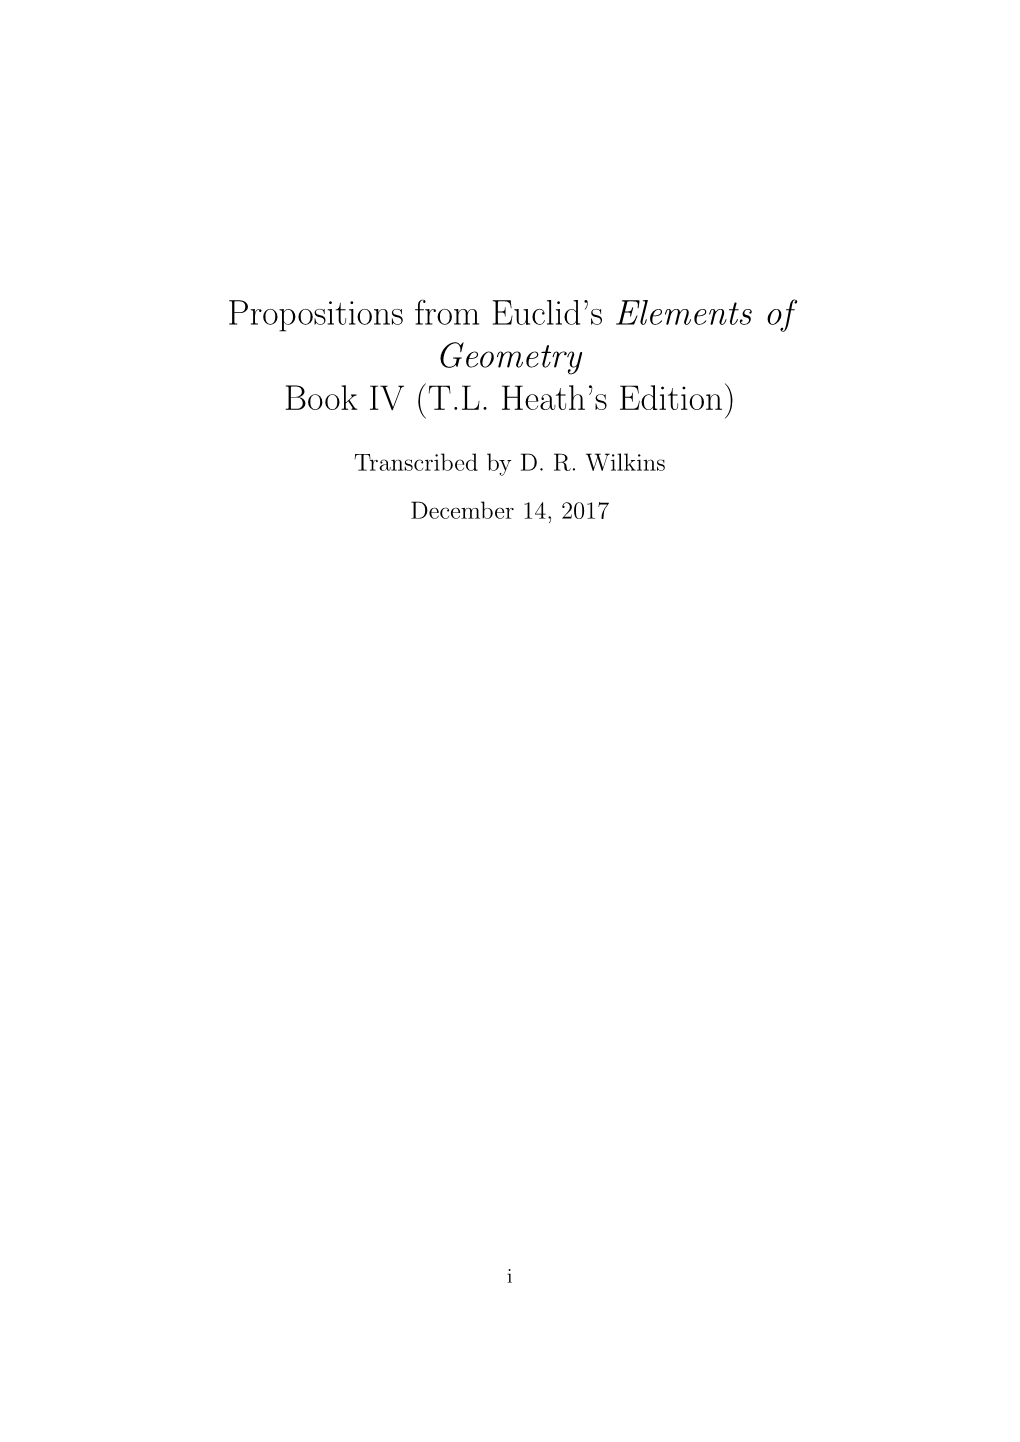 Euclid, Book IV